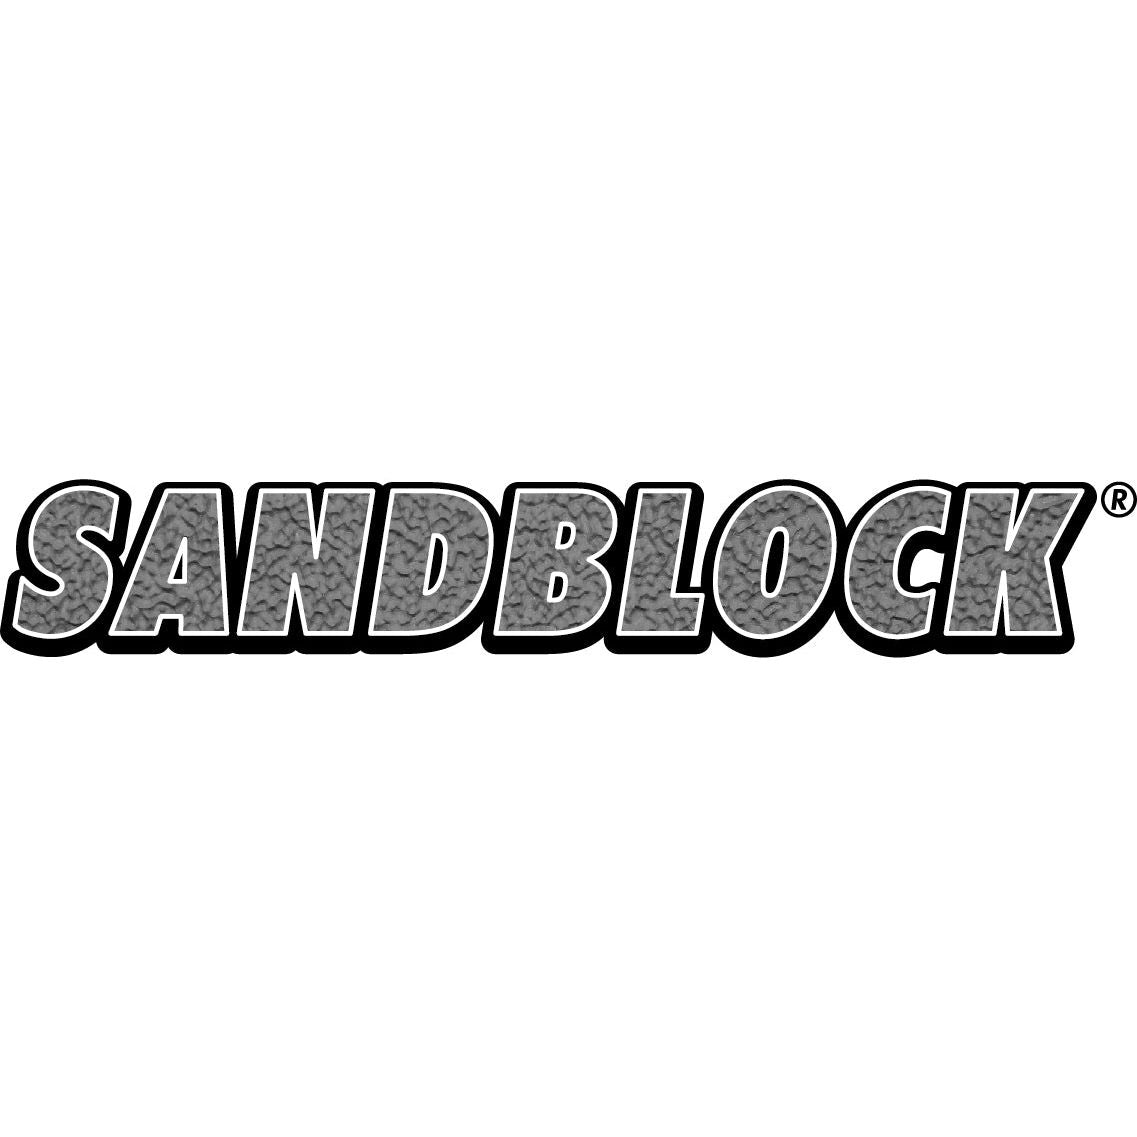 Marwi Pedaalset SP-828 aluminium huis Sandblock® zwart zwart